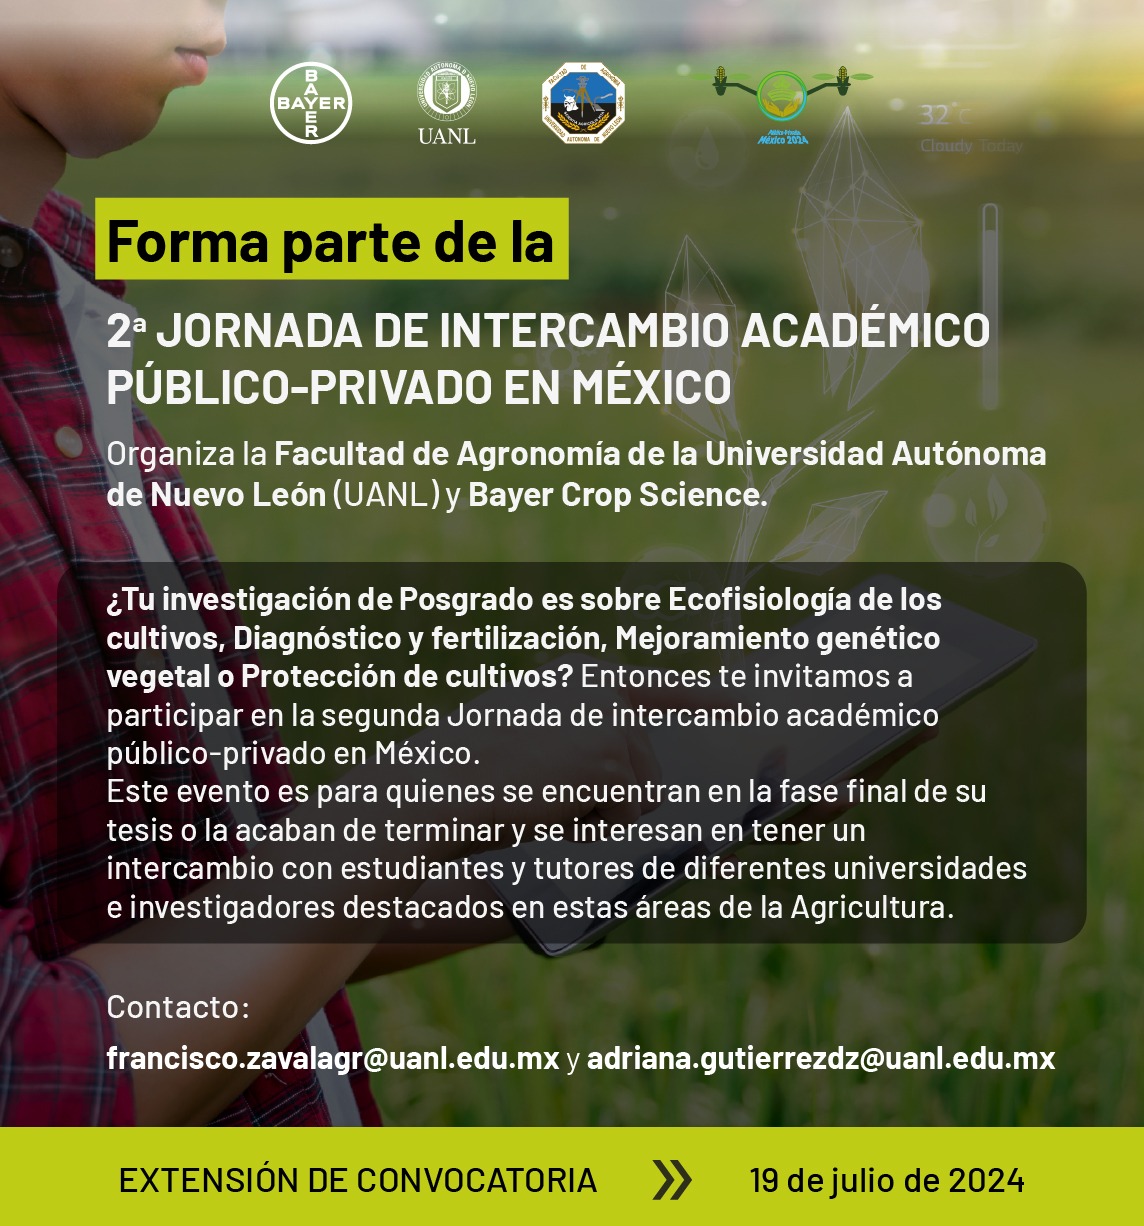 2a Jornada de Intercambio académico Publico-Privado en México